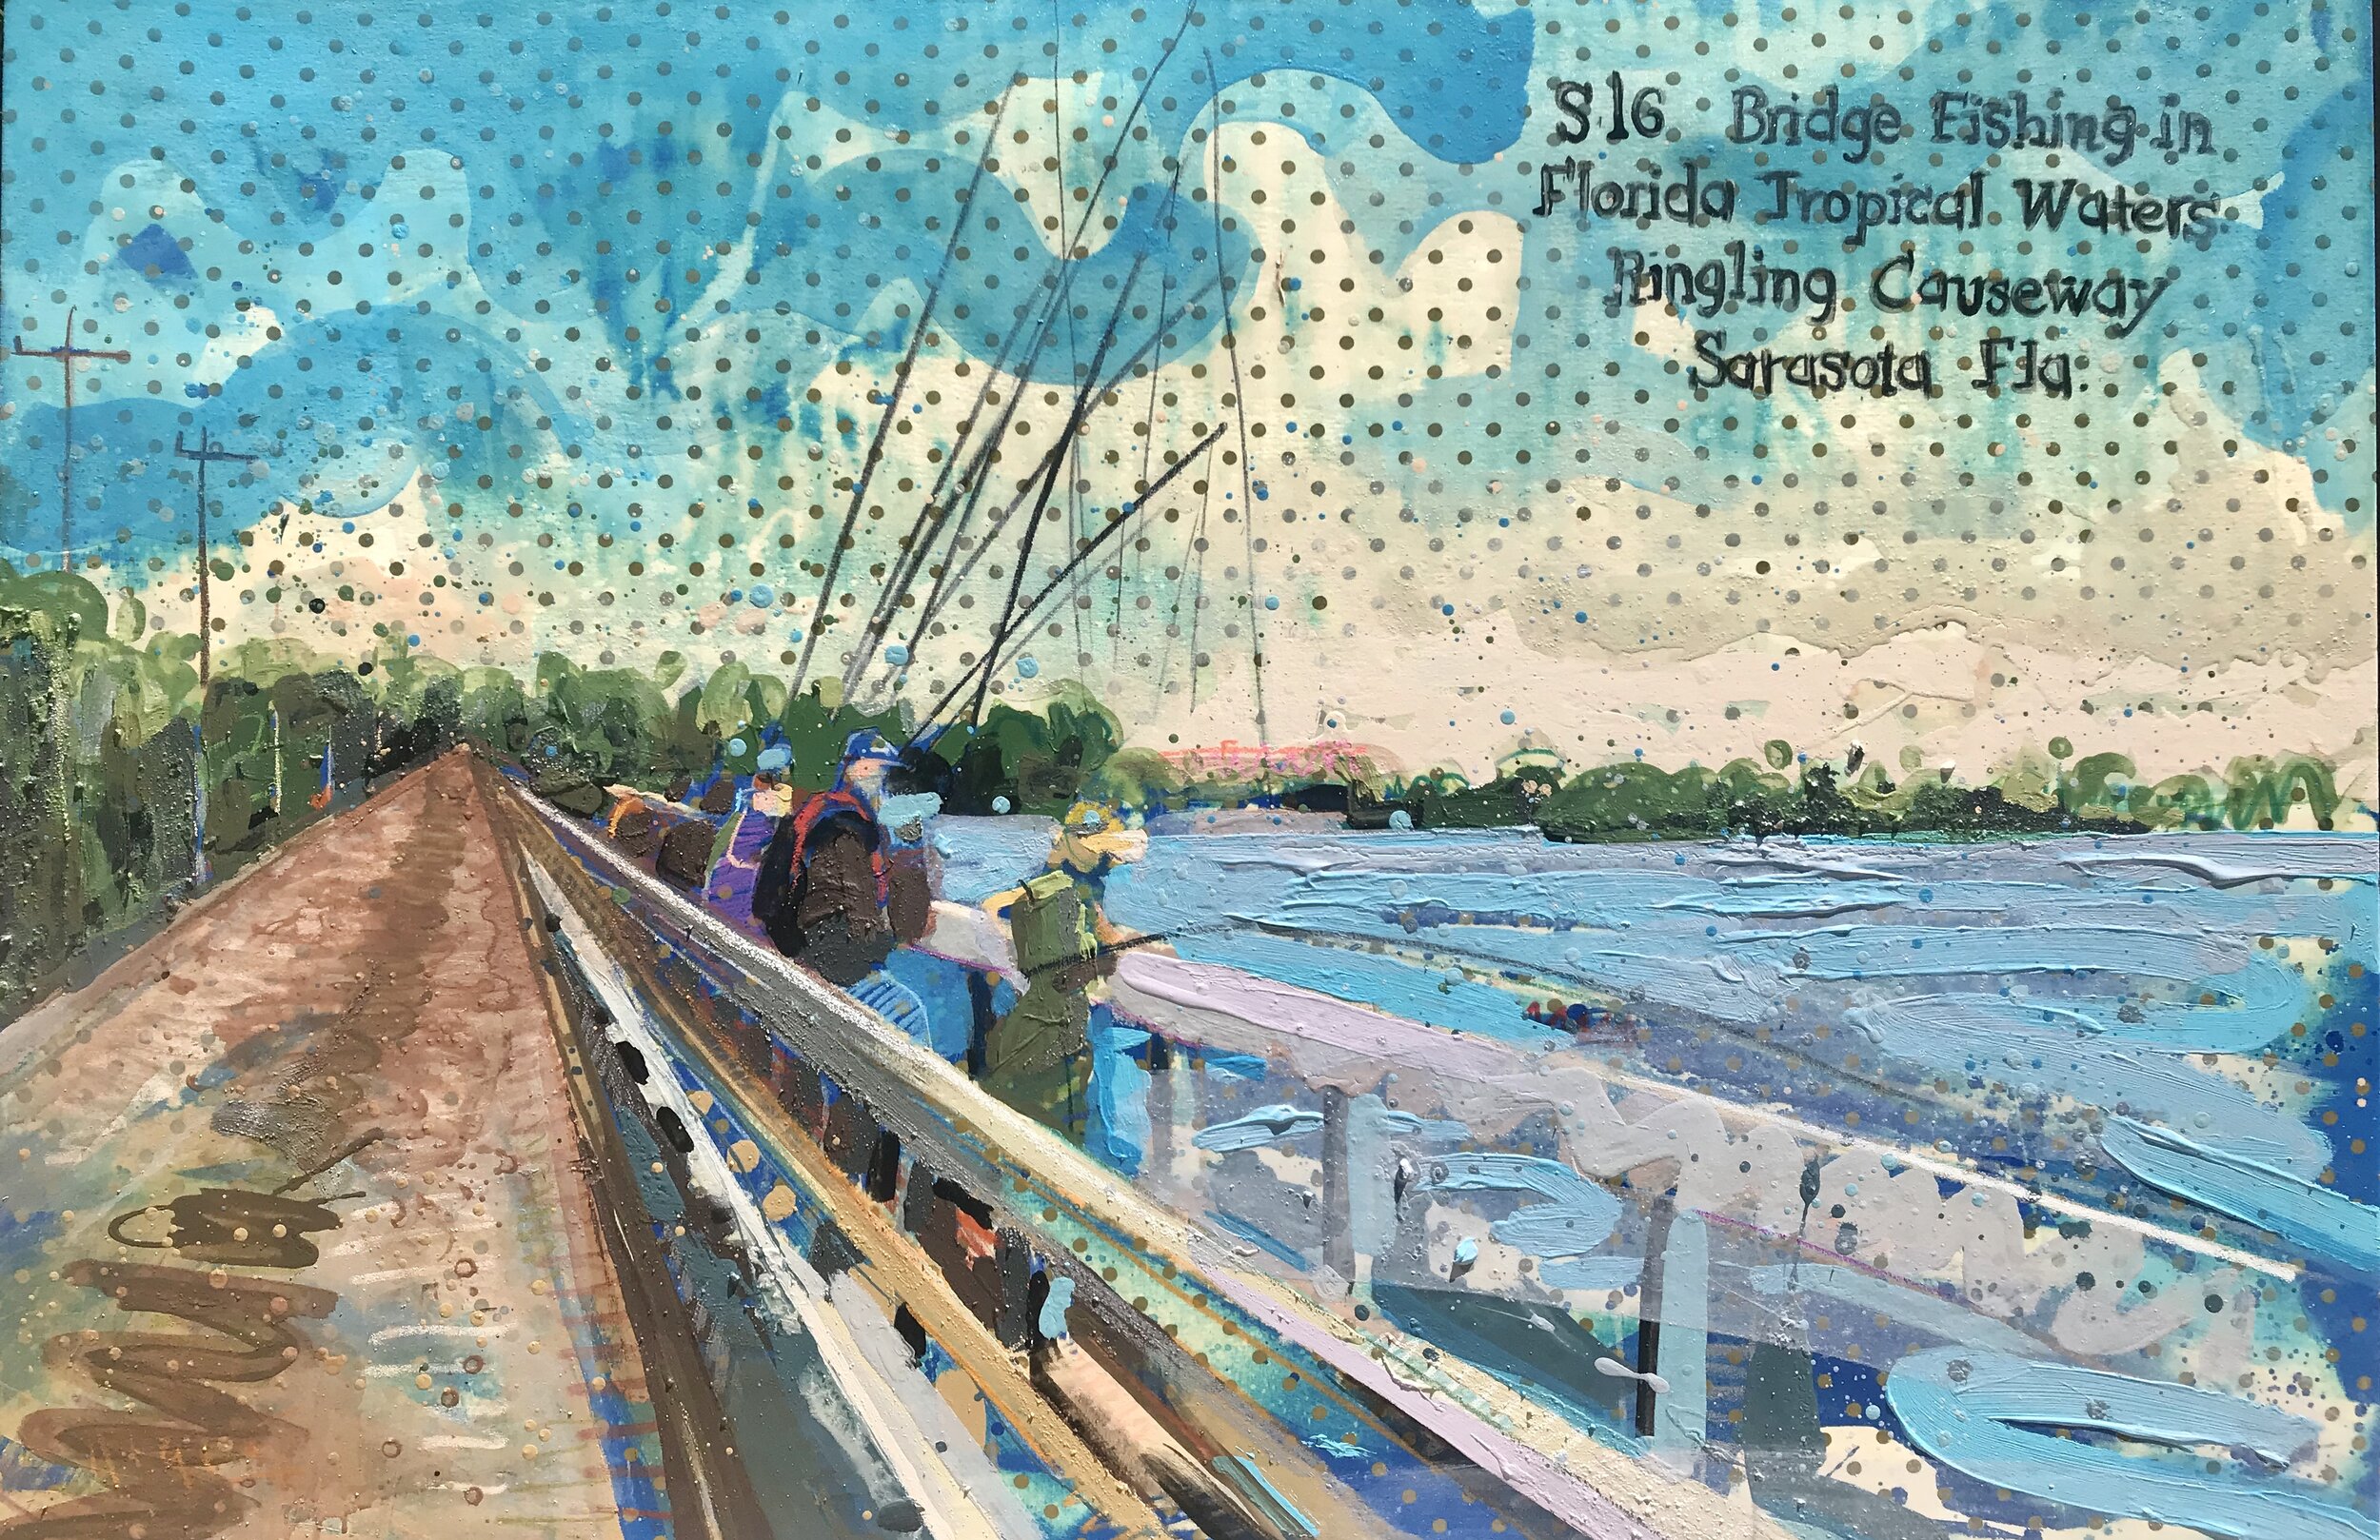 TIM JAEGER, BRIDGE FISHING IN FLORIDA TROPICAL WATERS, RINGLING CAUSEWAY, 2020